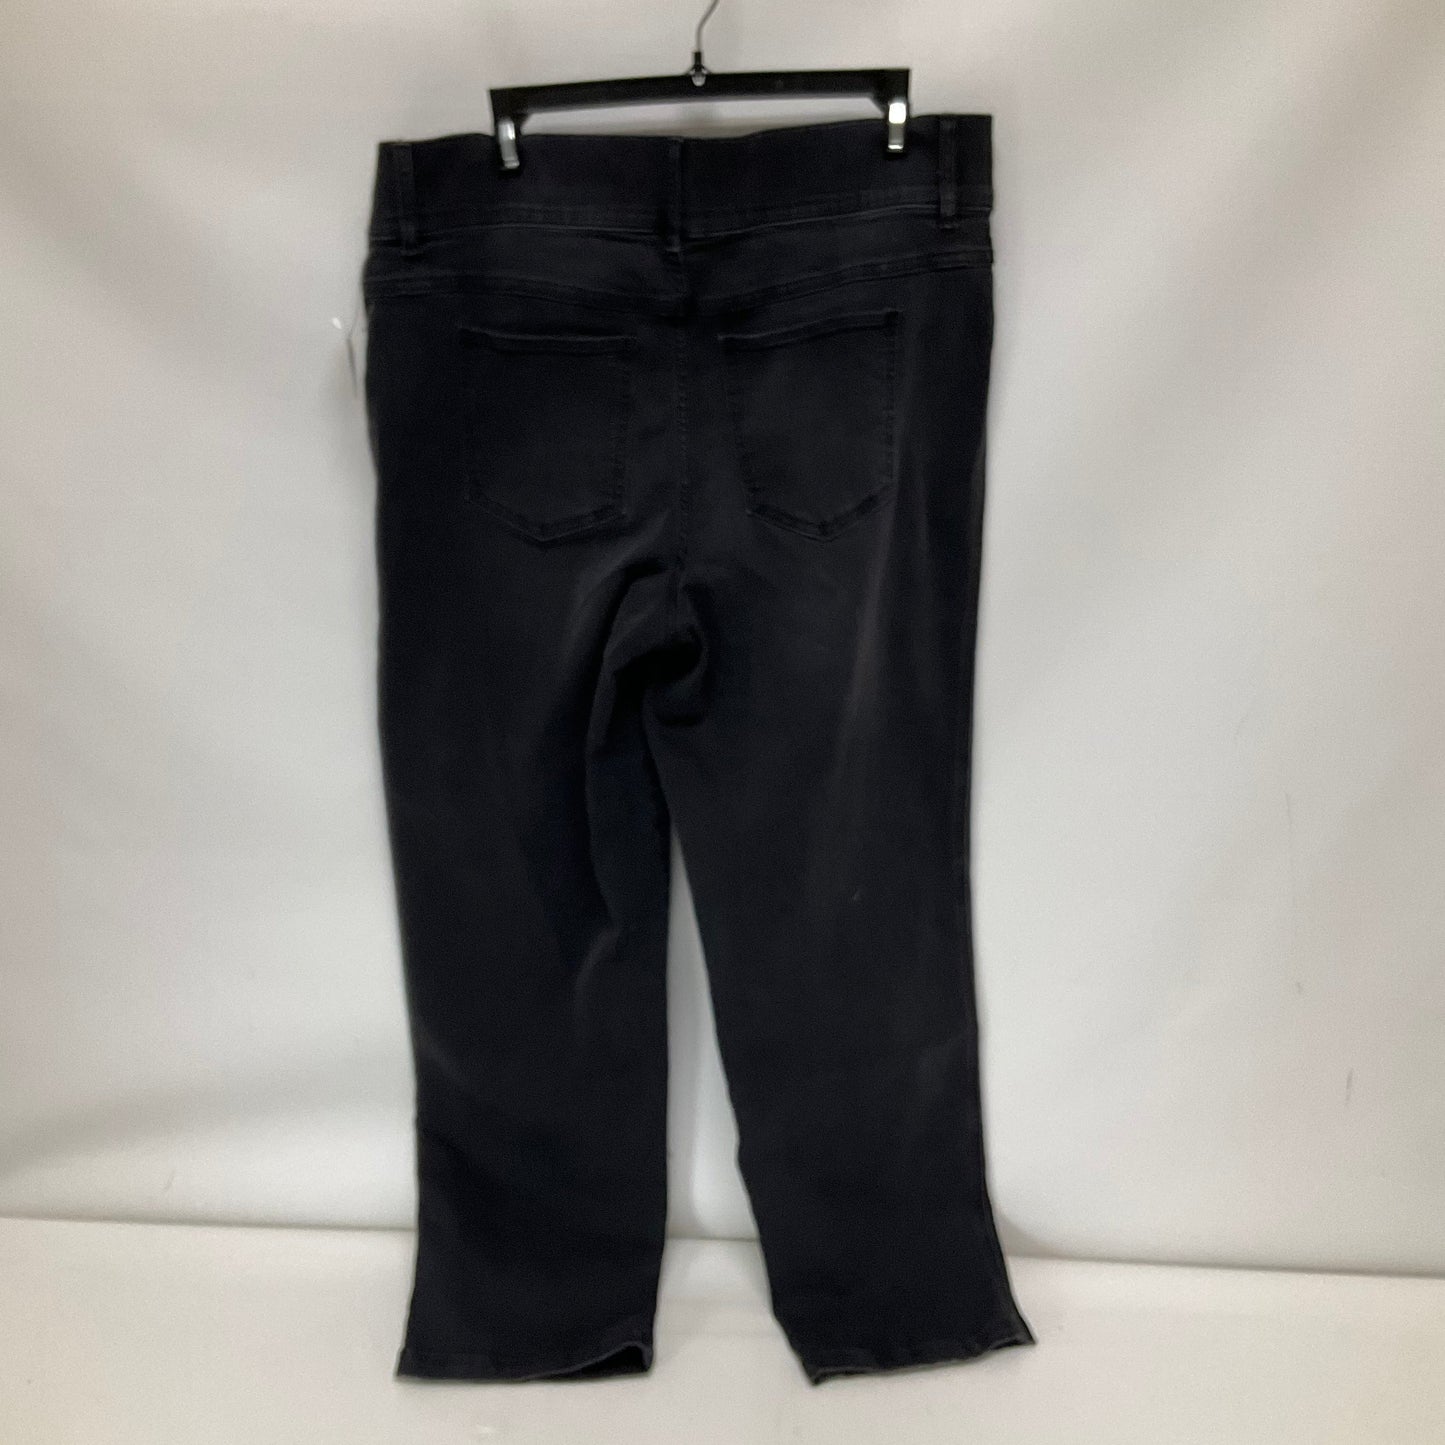 Black Denim Jeans Flared Spanx, Size 1x